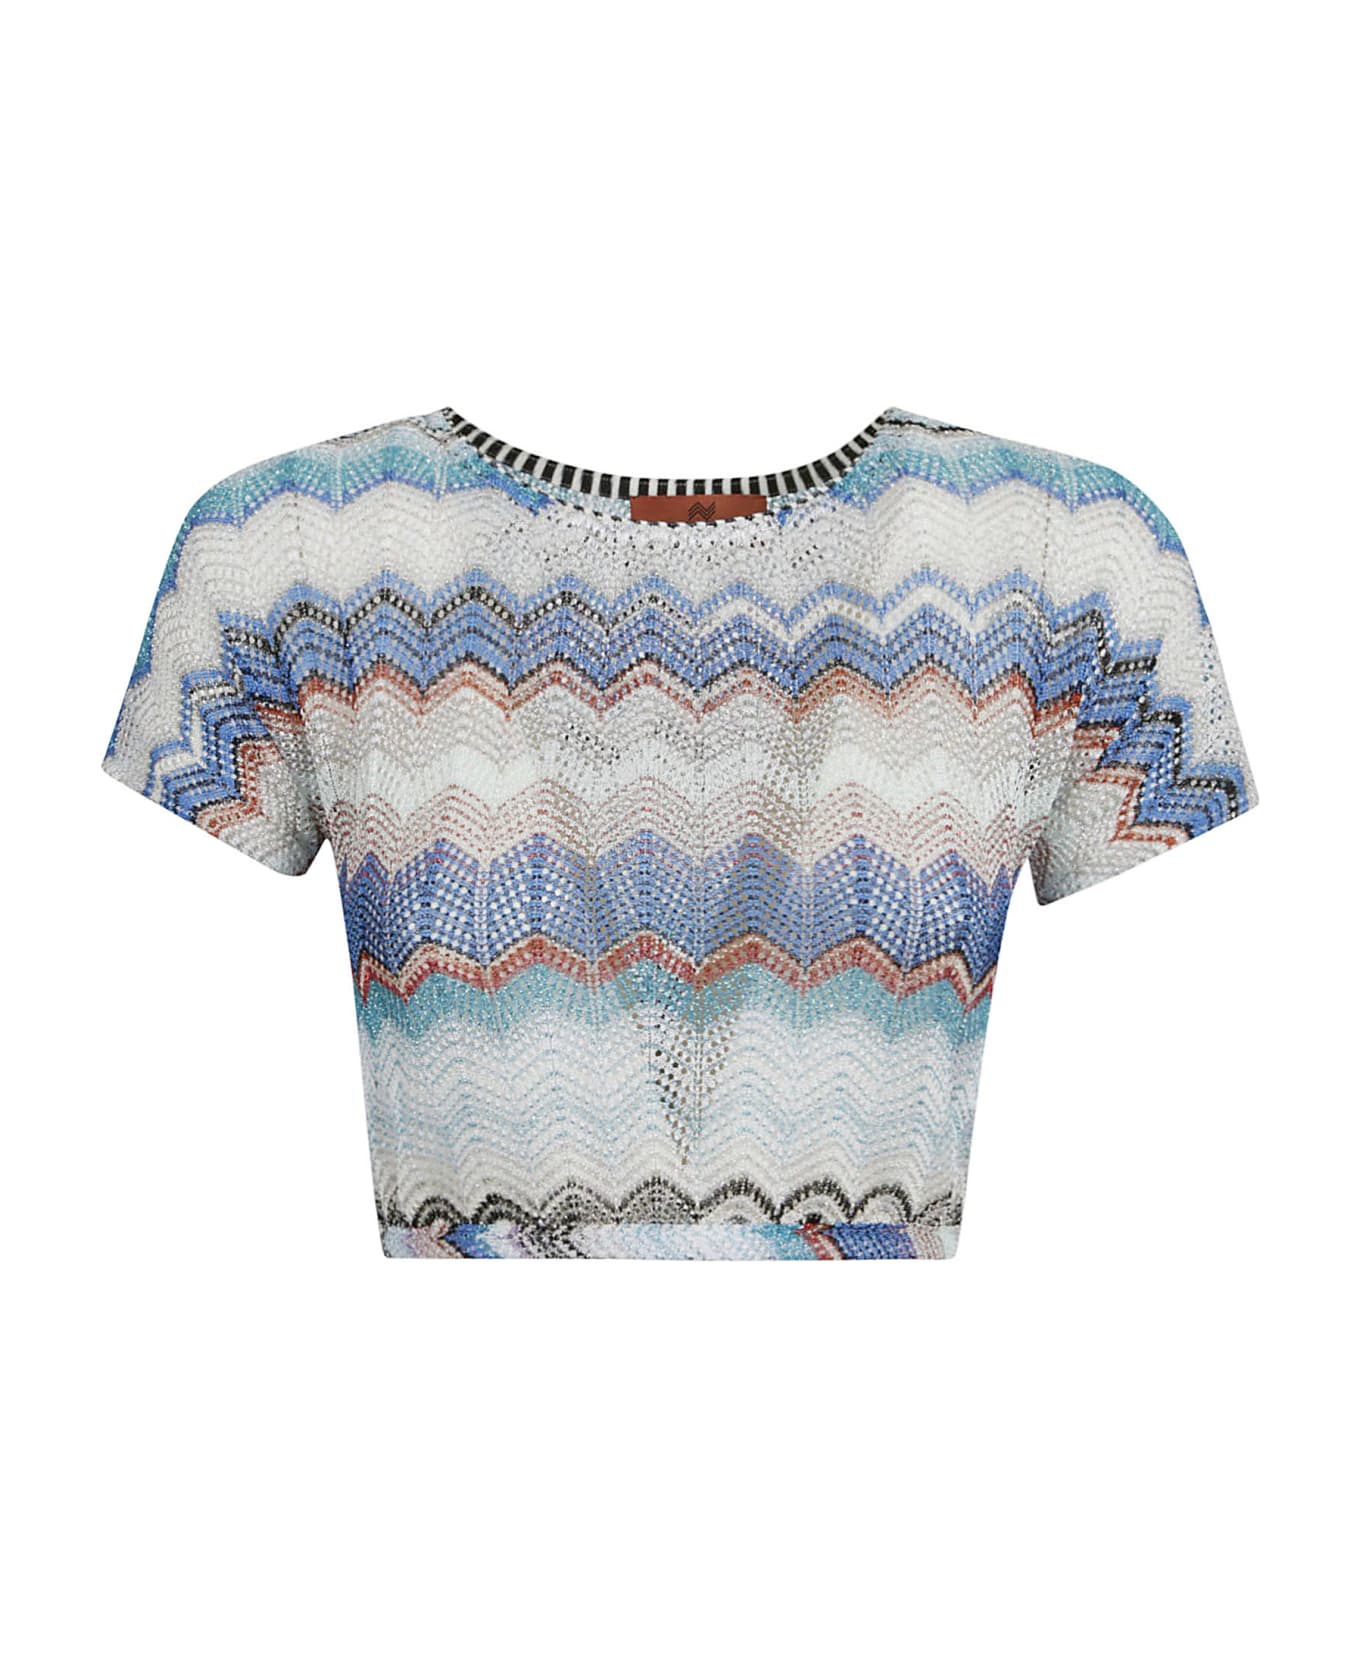 Missoni Zig-zag Stripe Patterned Cropped Top - Multicolor Tシャツ